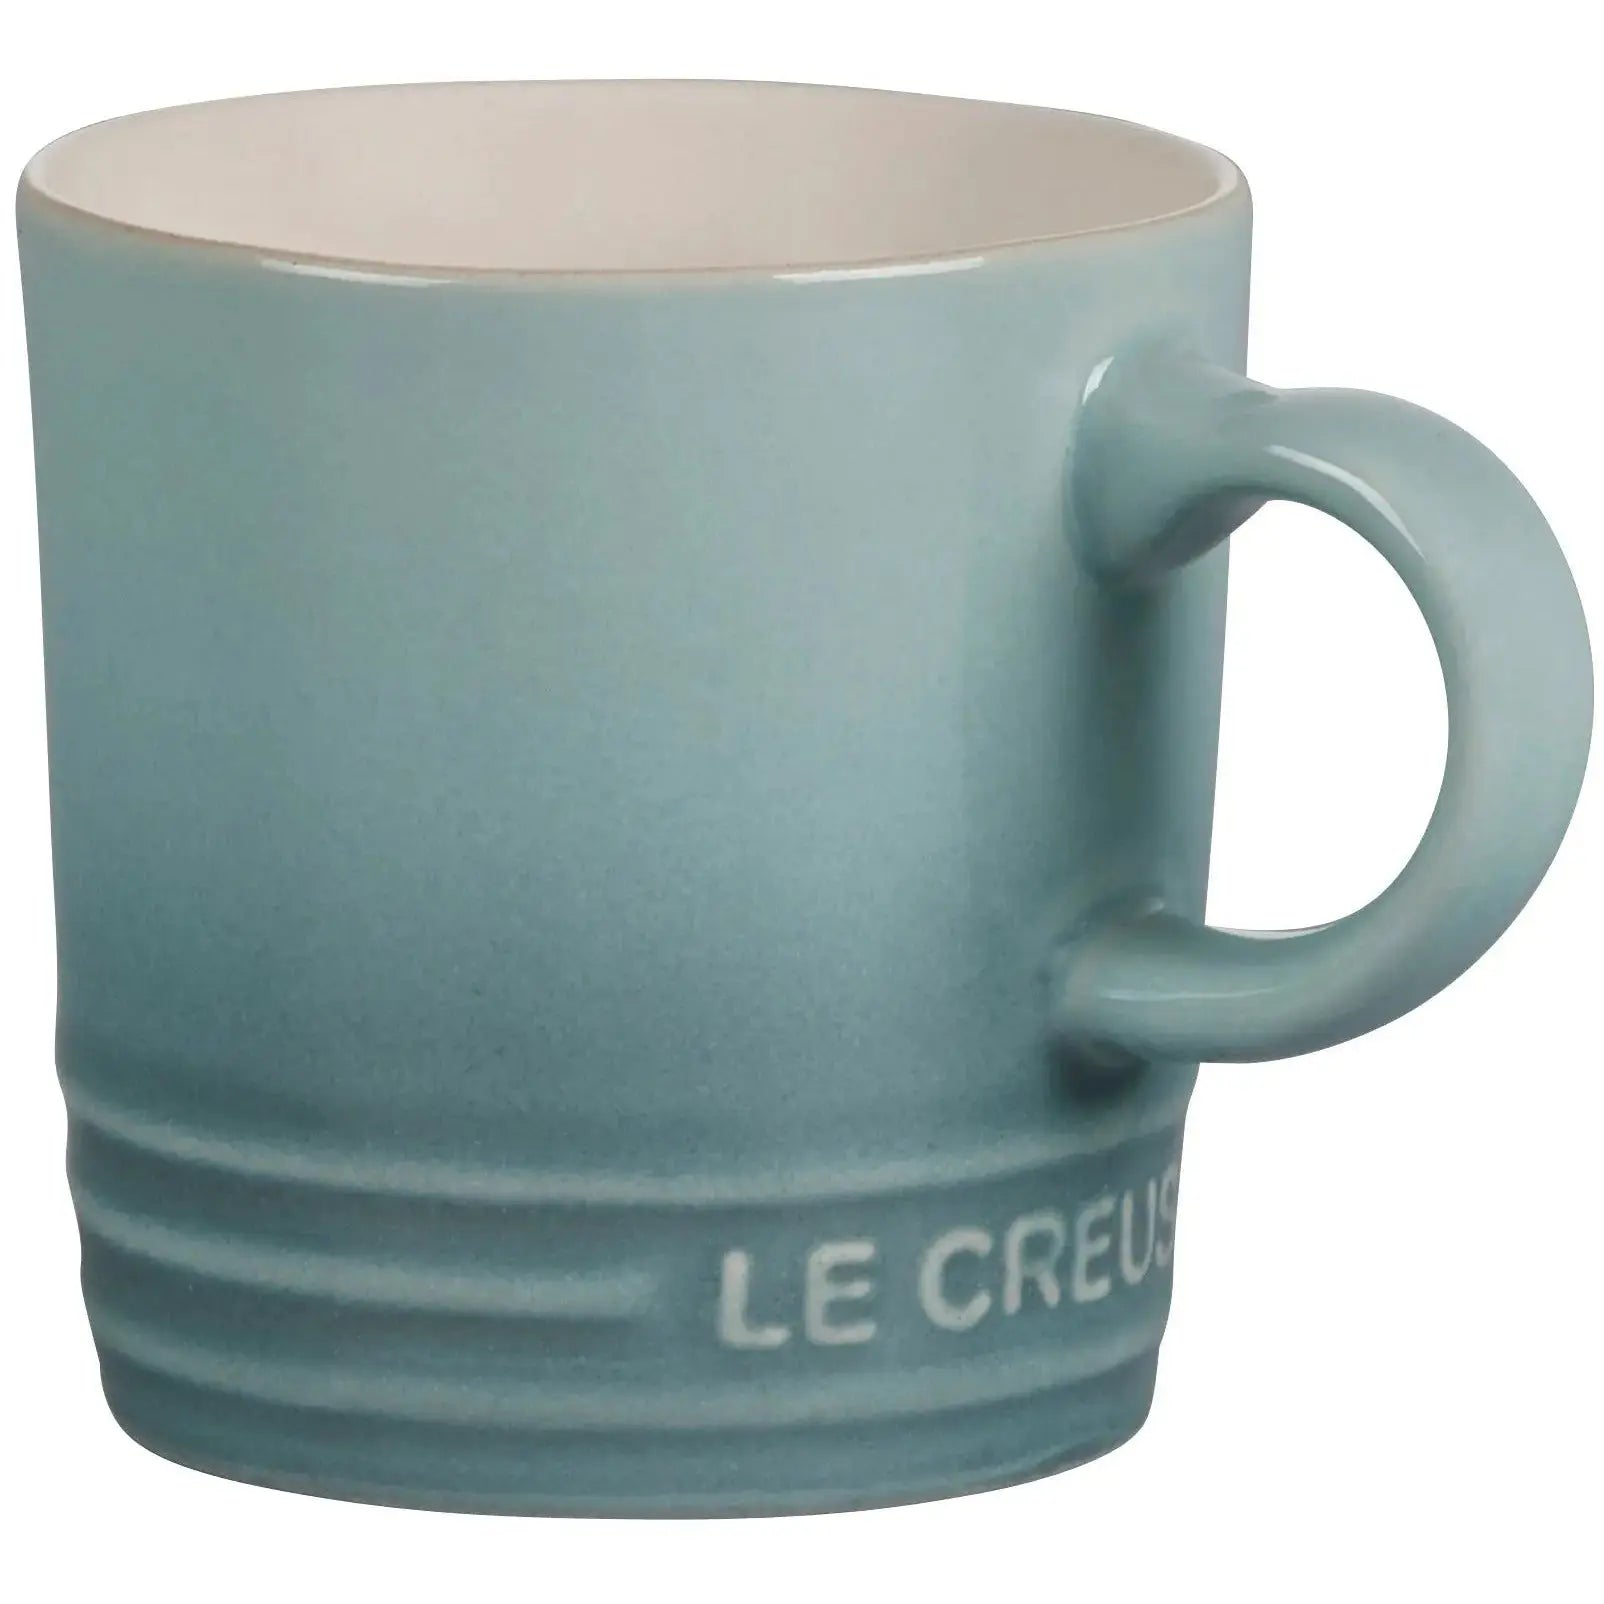 Le Creuset Espresso Mug - Sea Salt LE CREUSET